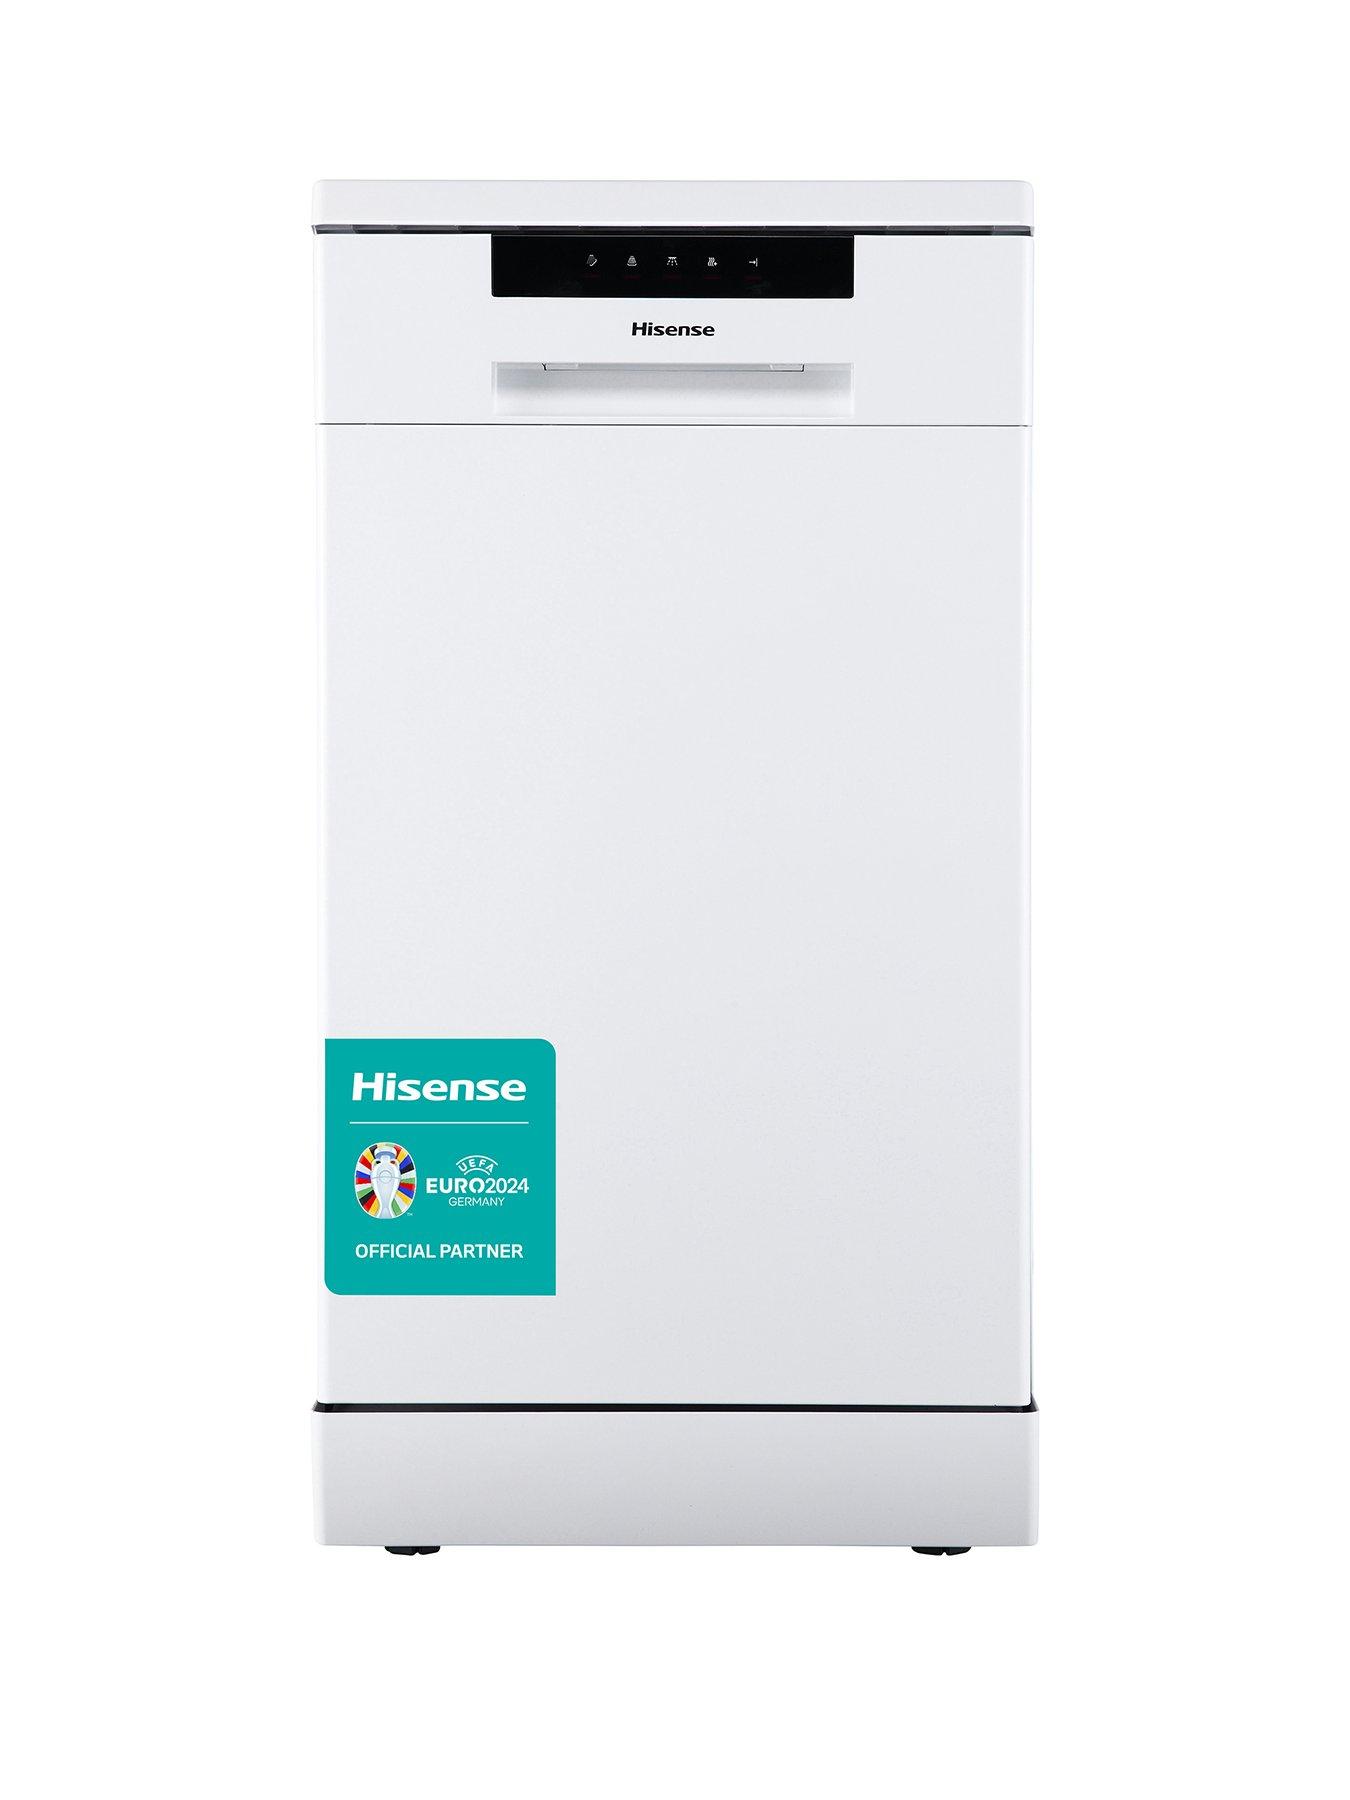 Product photograph of Hisense Hs523e15wuk Slimline 30 Minute Quick Wash 10 Place Dishwasher - White from very.co.uk